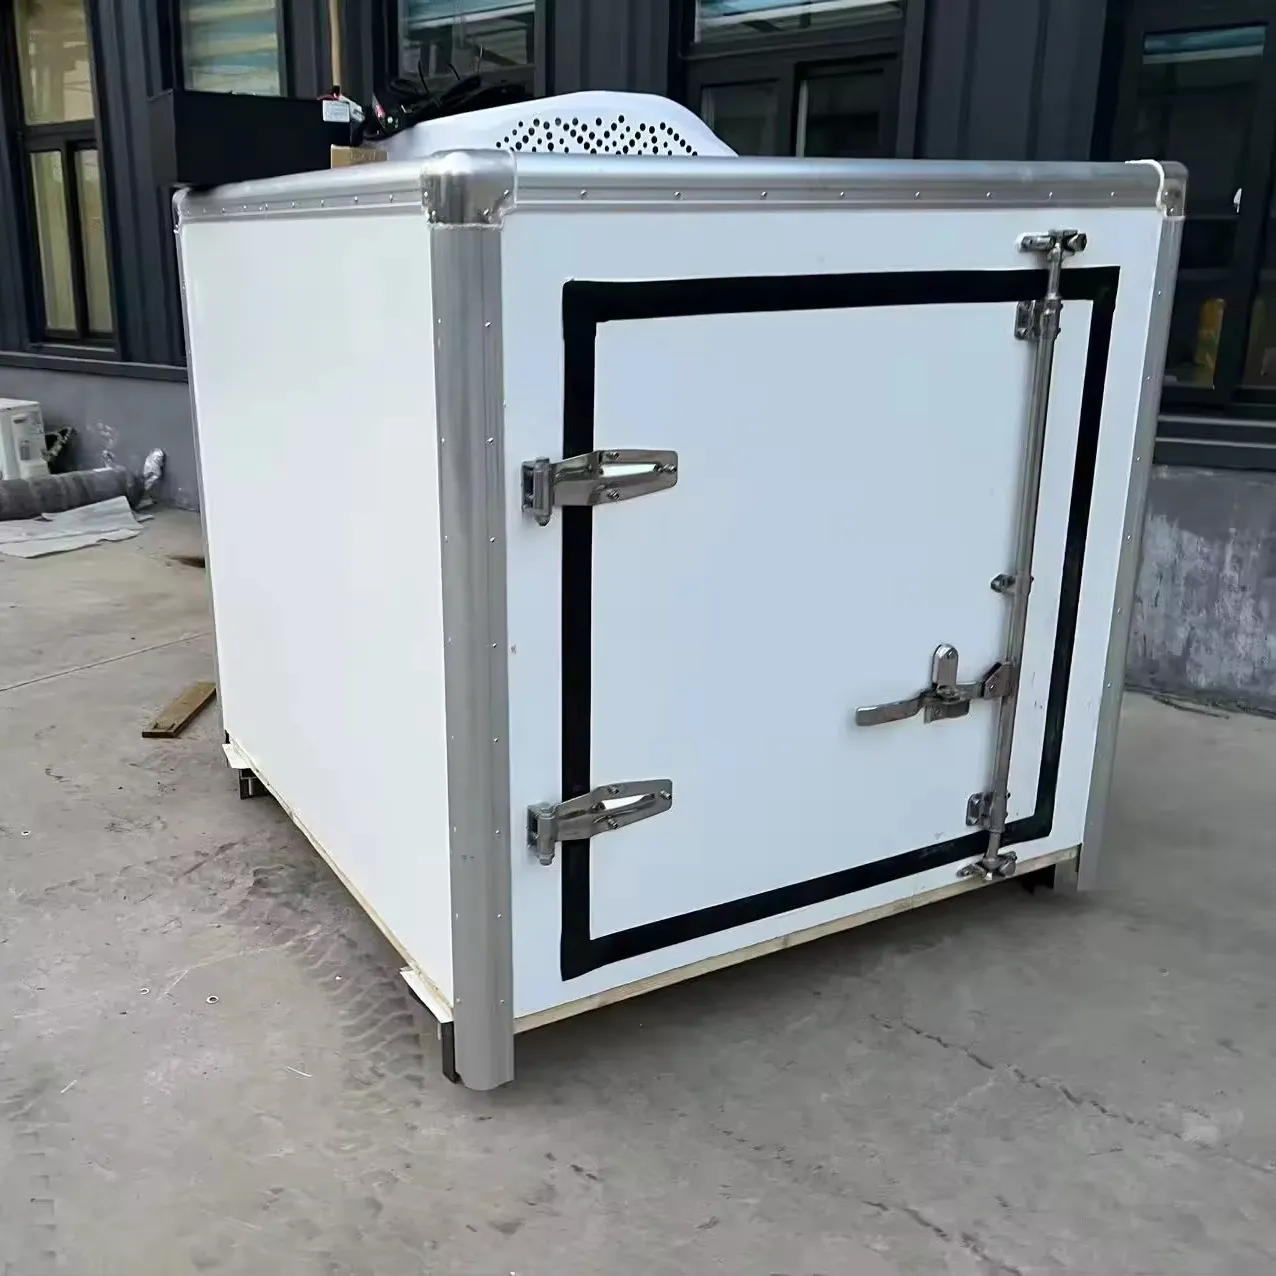 Caixa refrigerada personalizada para triciclo barato, recipiente refrigerado, caixa de armazenamento, refrigerador